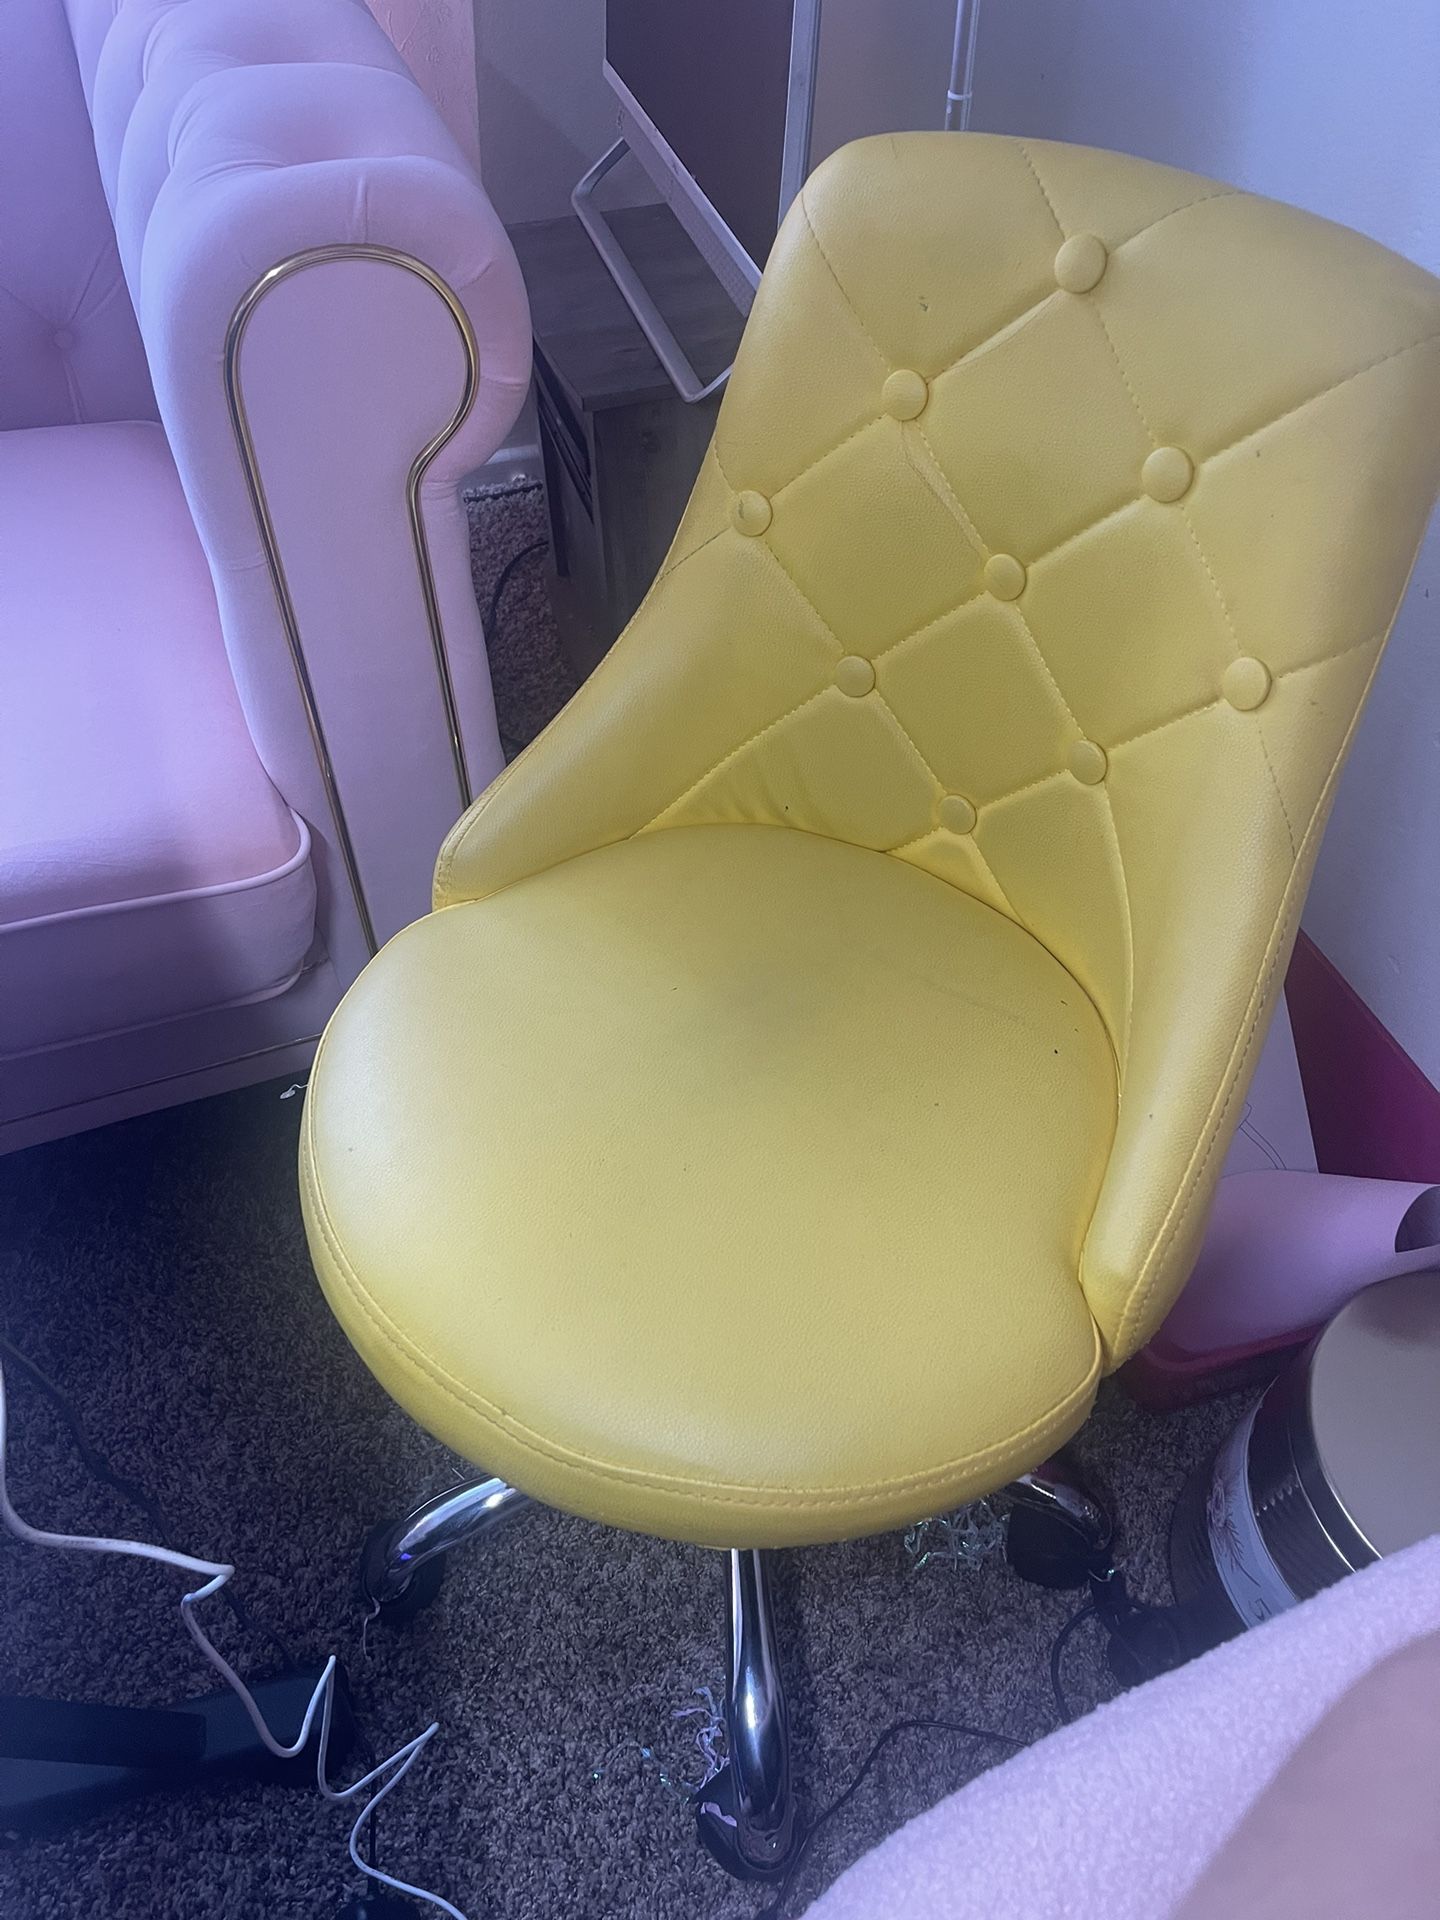 $30 Desk Chair